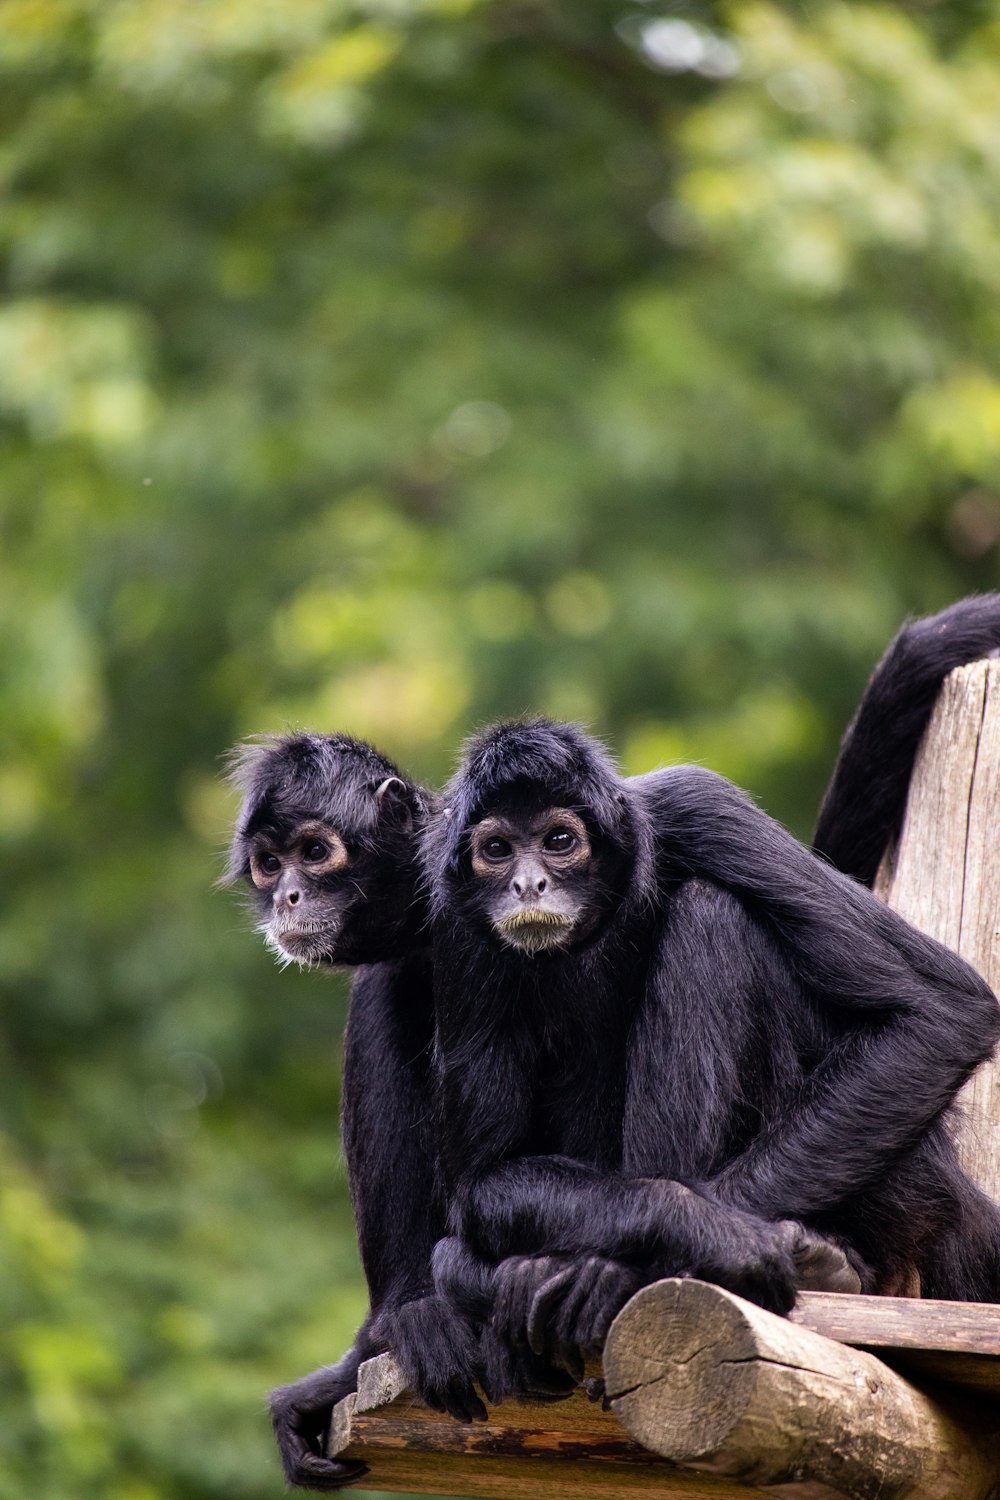 a couple of monkeys sitting on a log